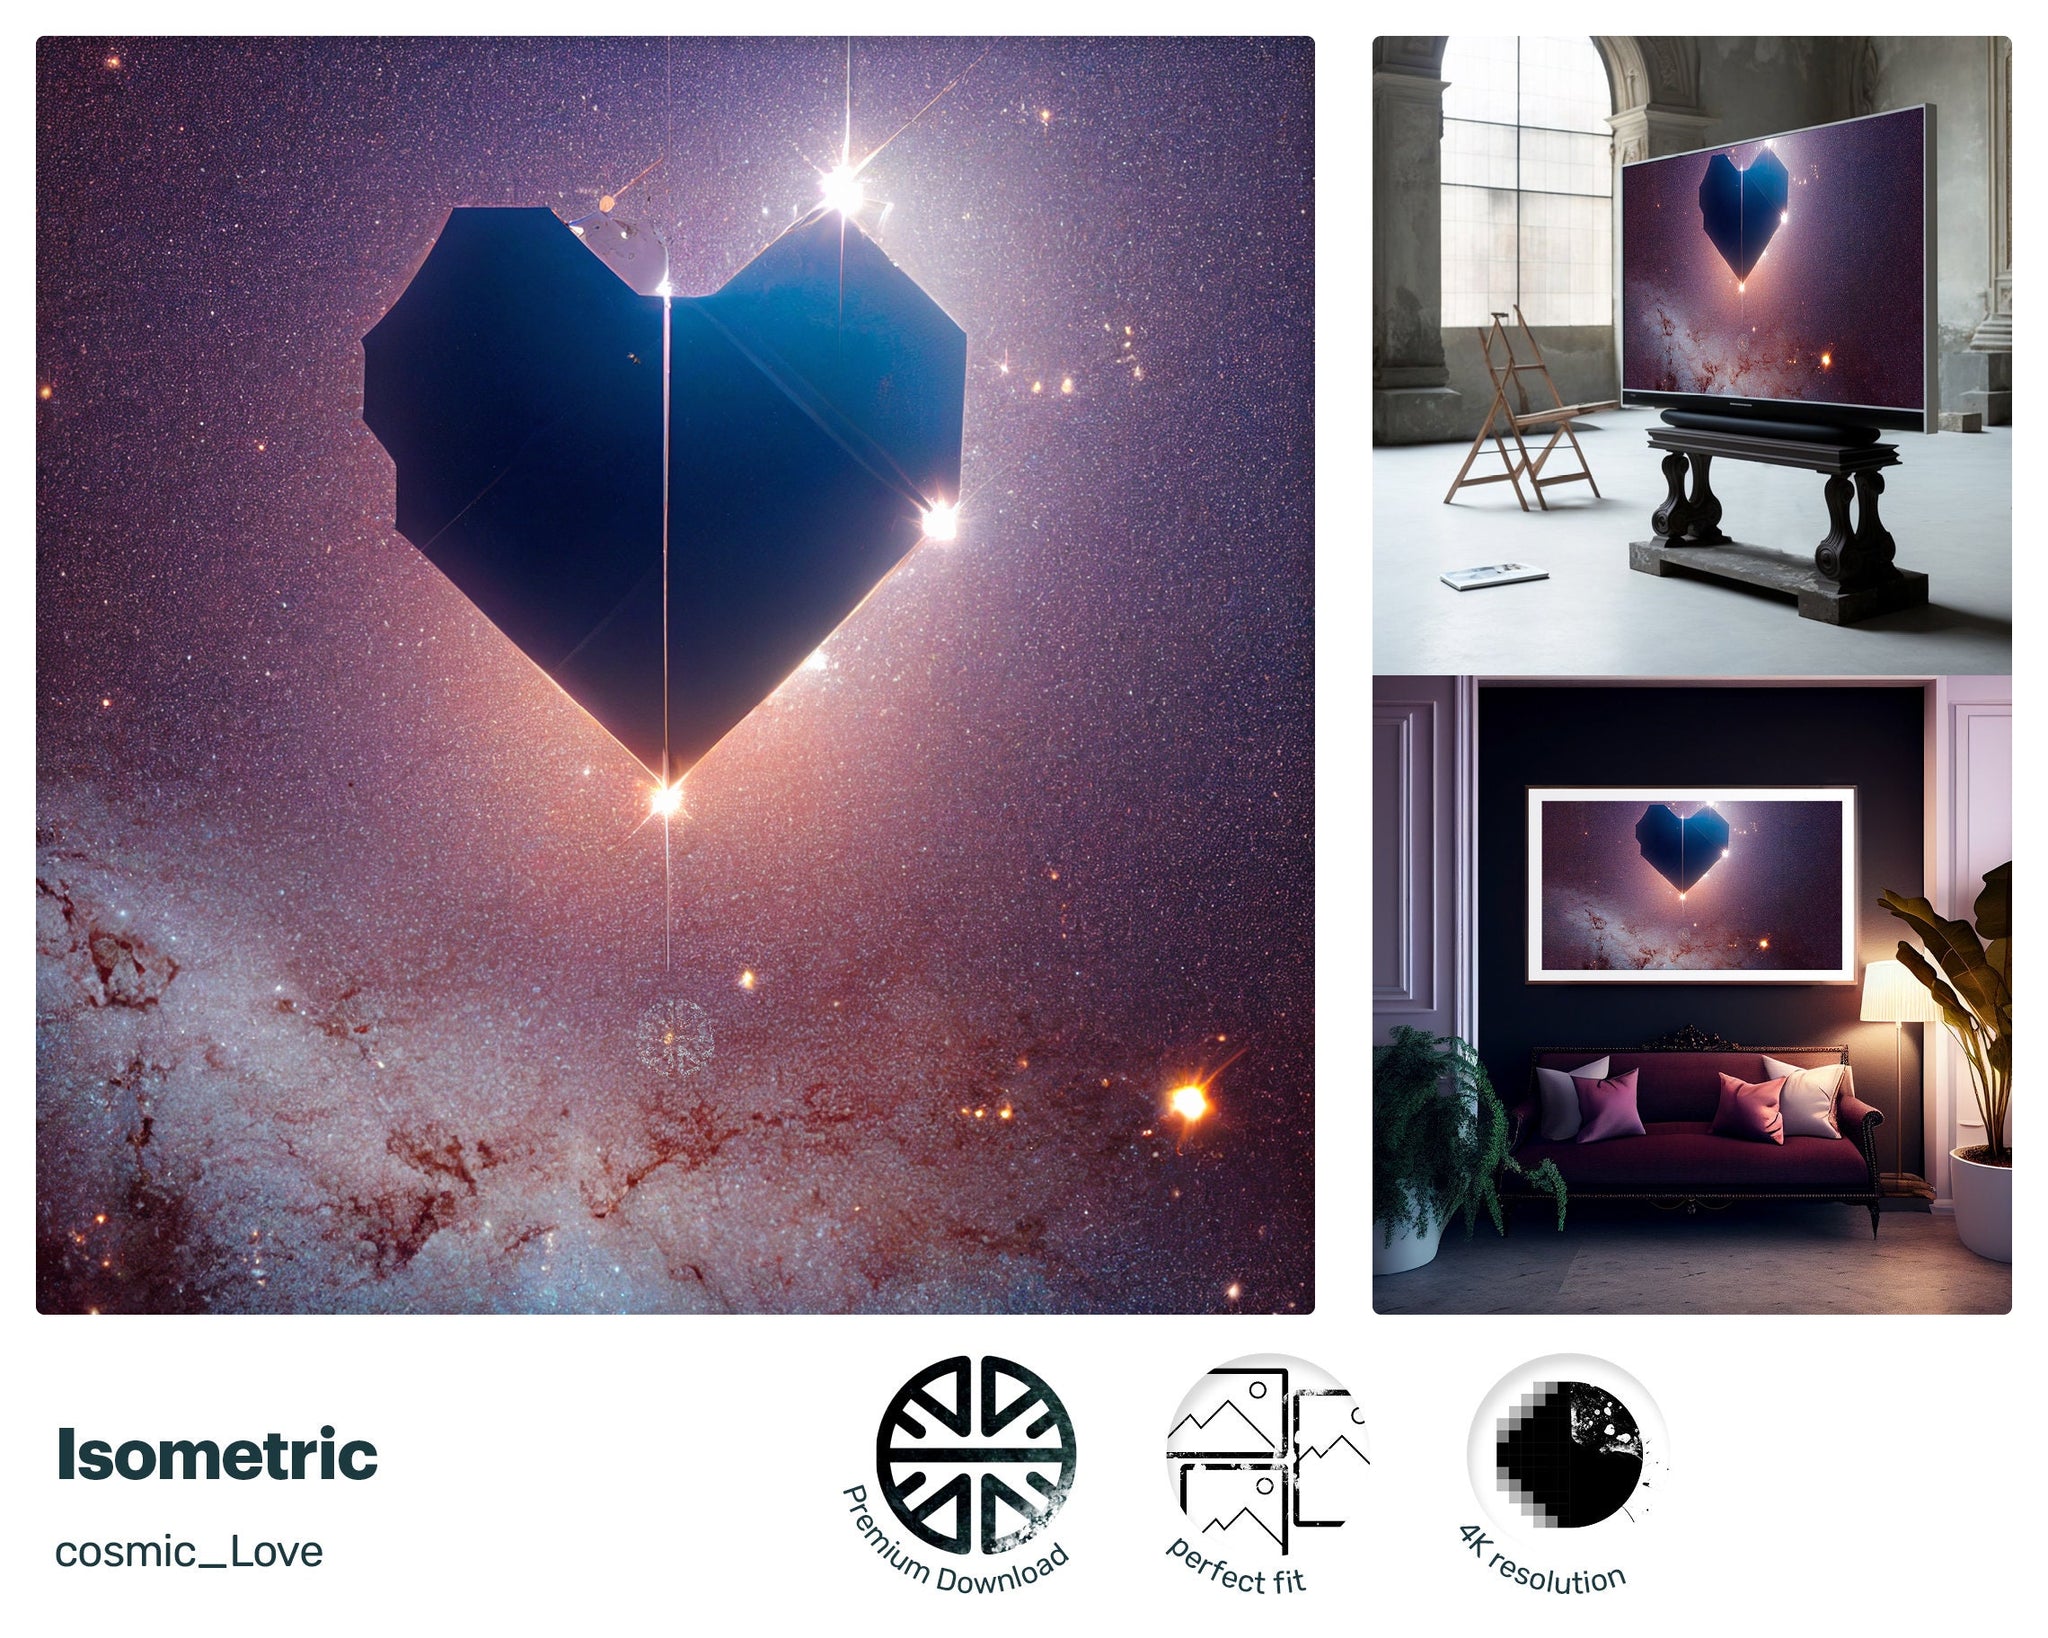 Samsung Frame TV Art, Isometric, james webb telescope, nerd culture, 2001 Space Odyssey, mens valentines gift